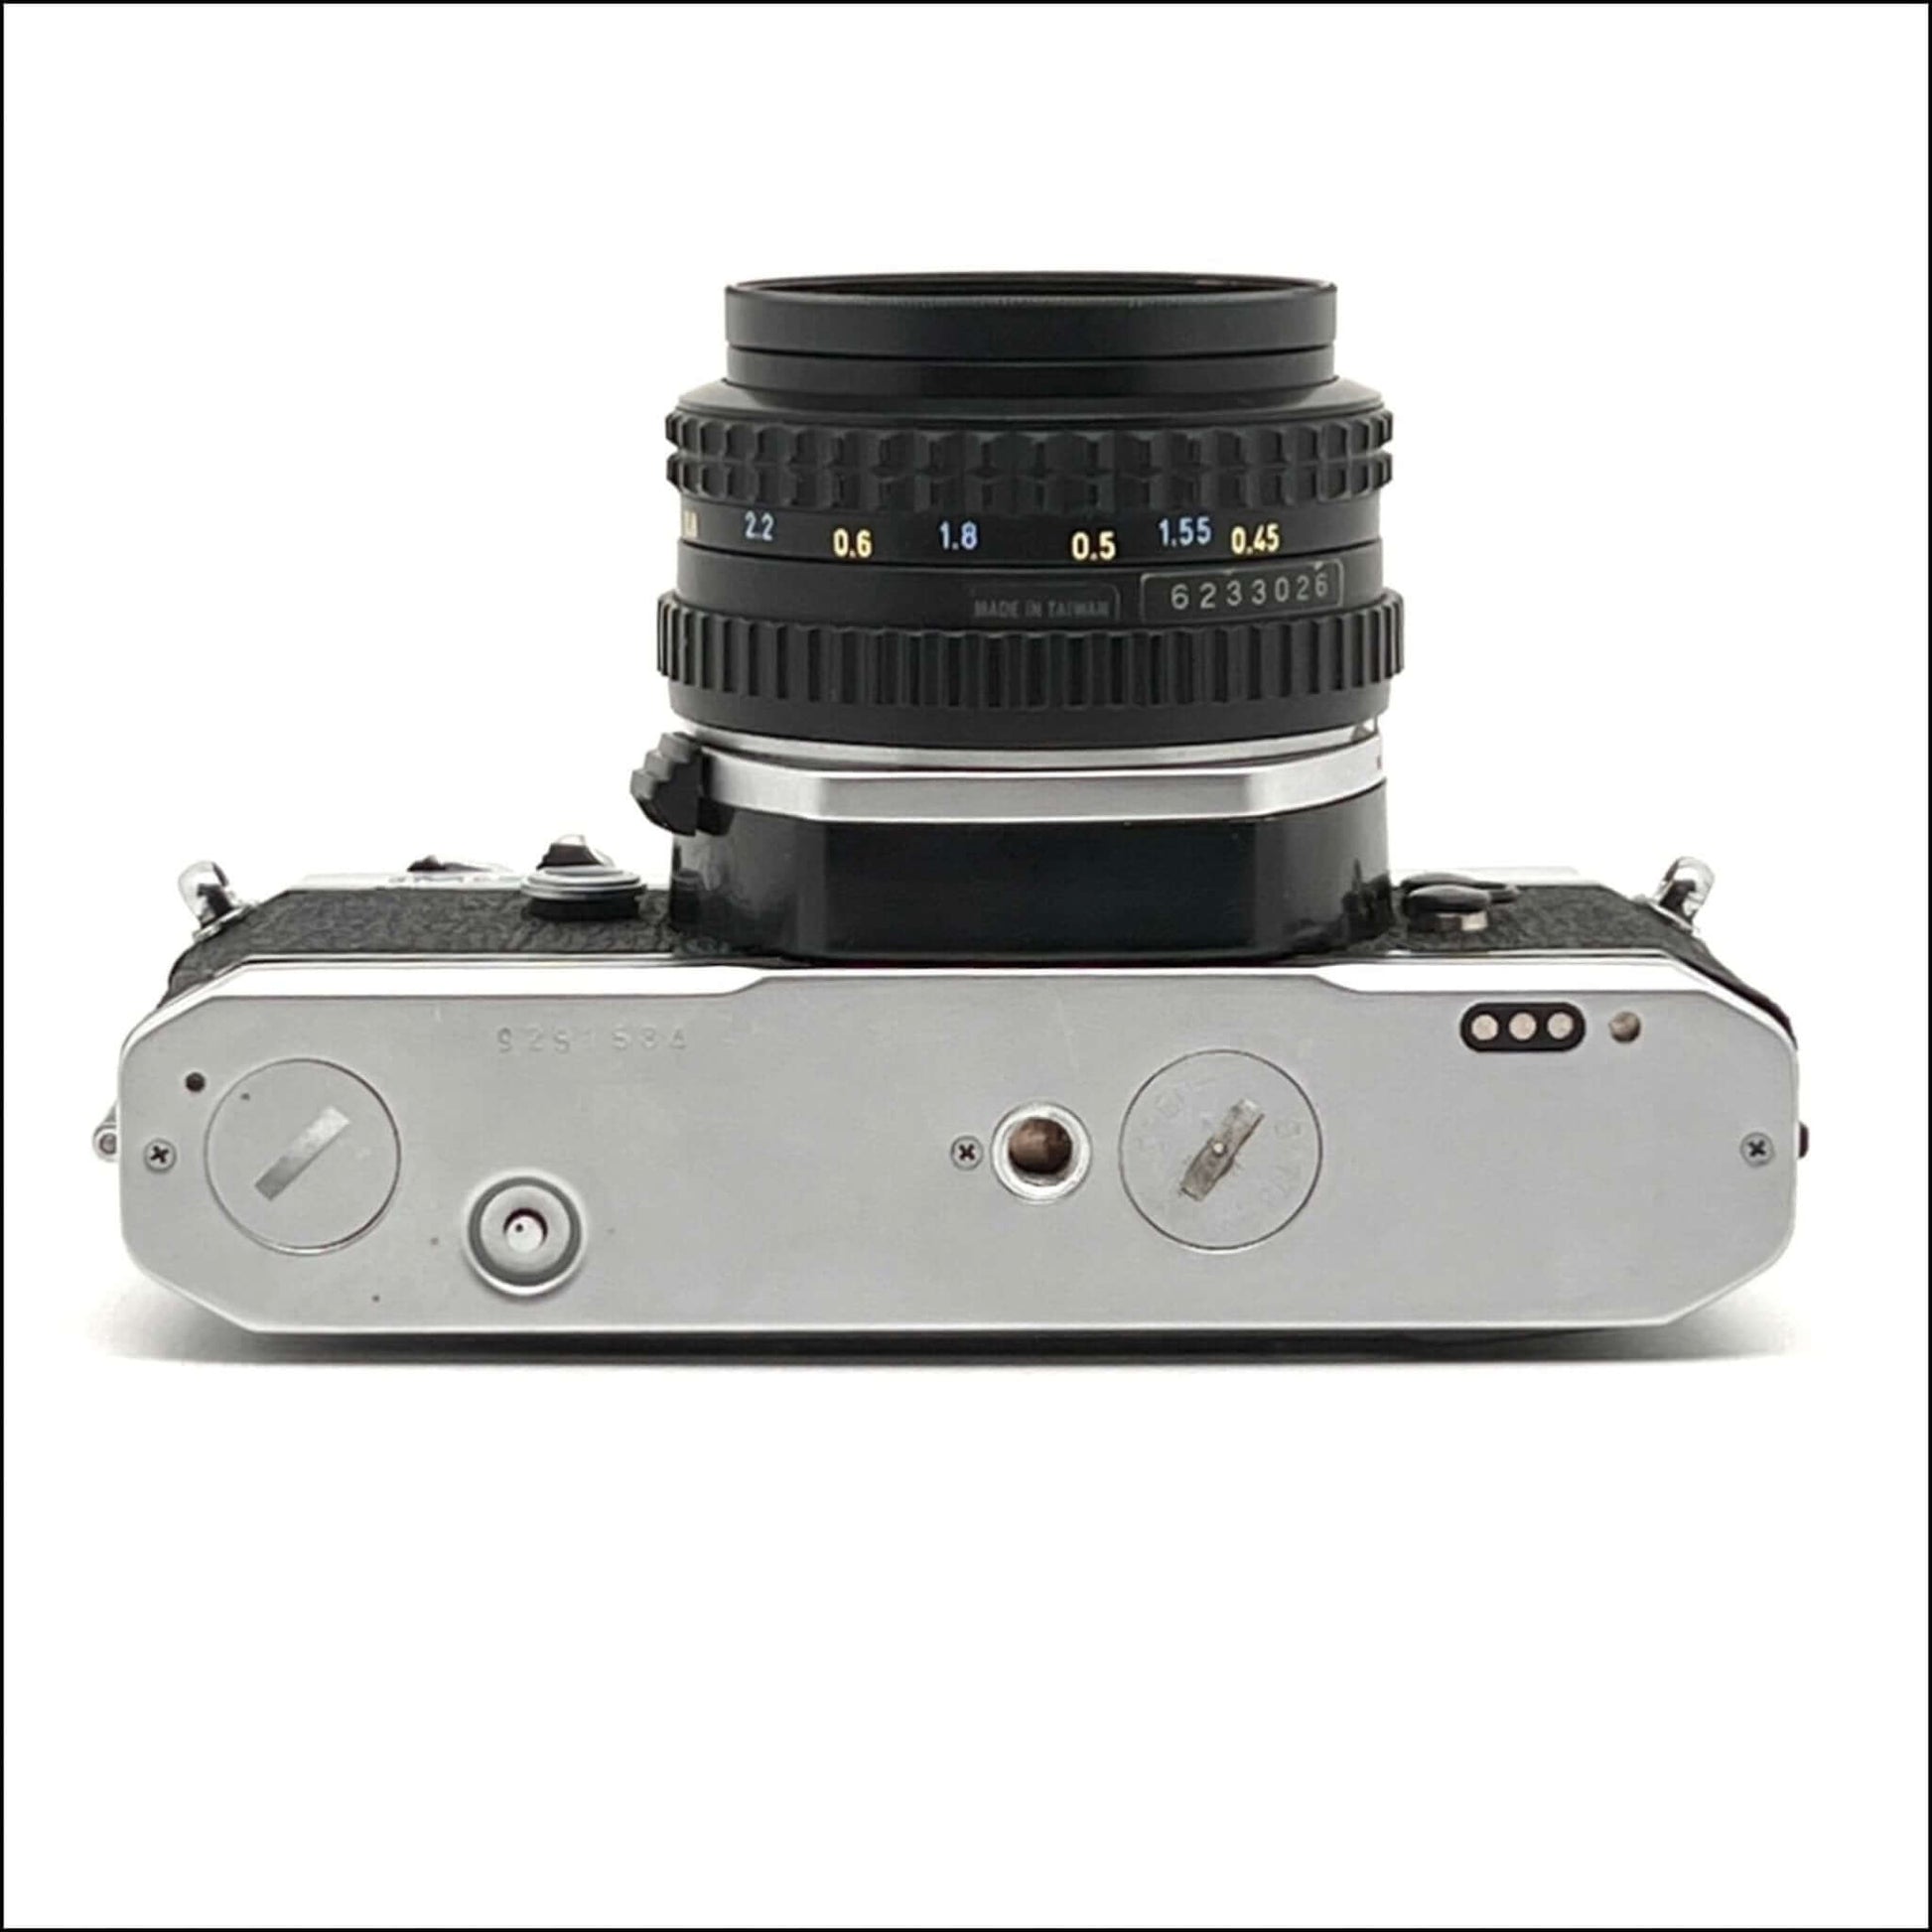 Pentax Mx Used 35mm Film Camera + 50mm F2 Lens